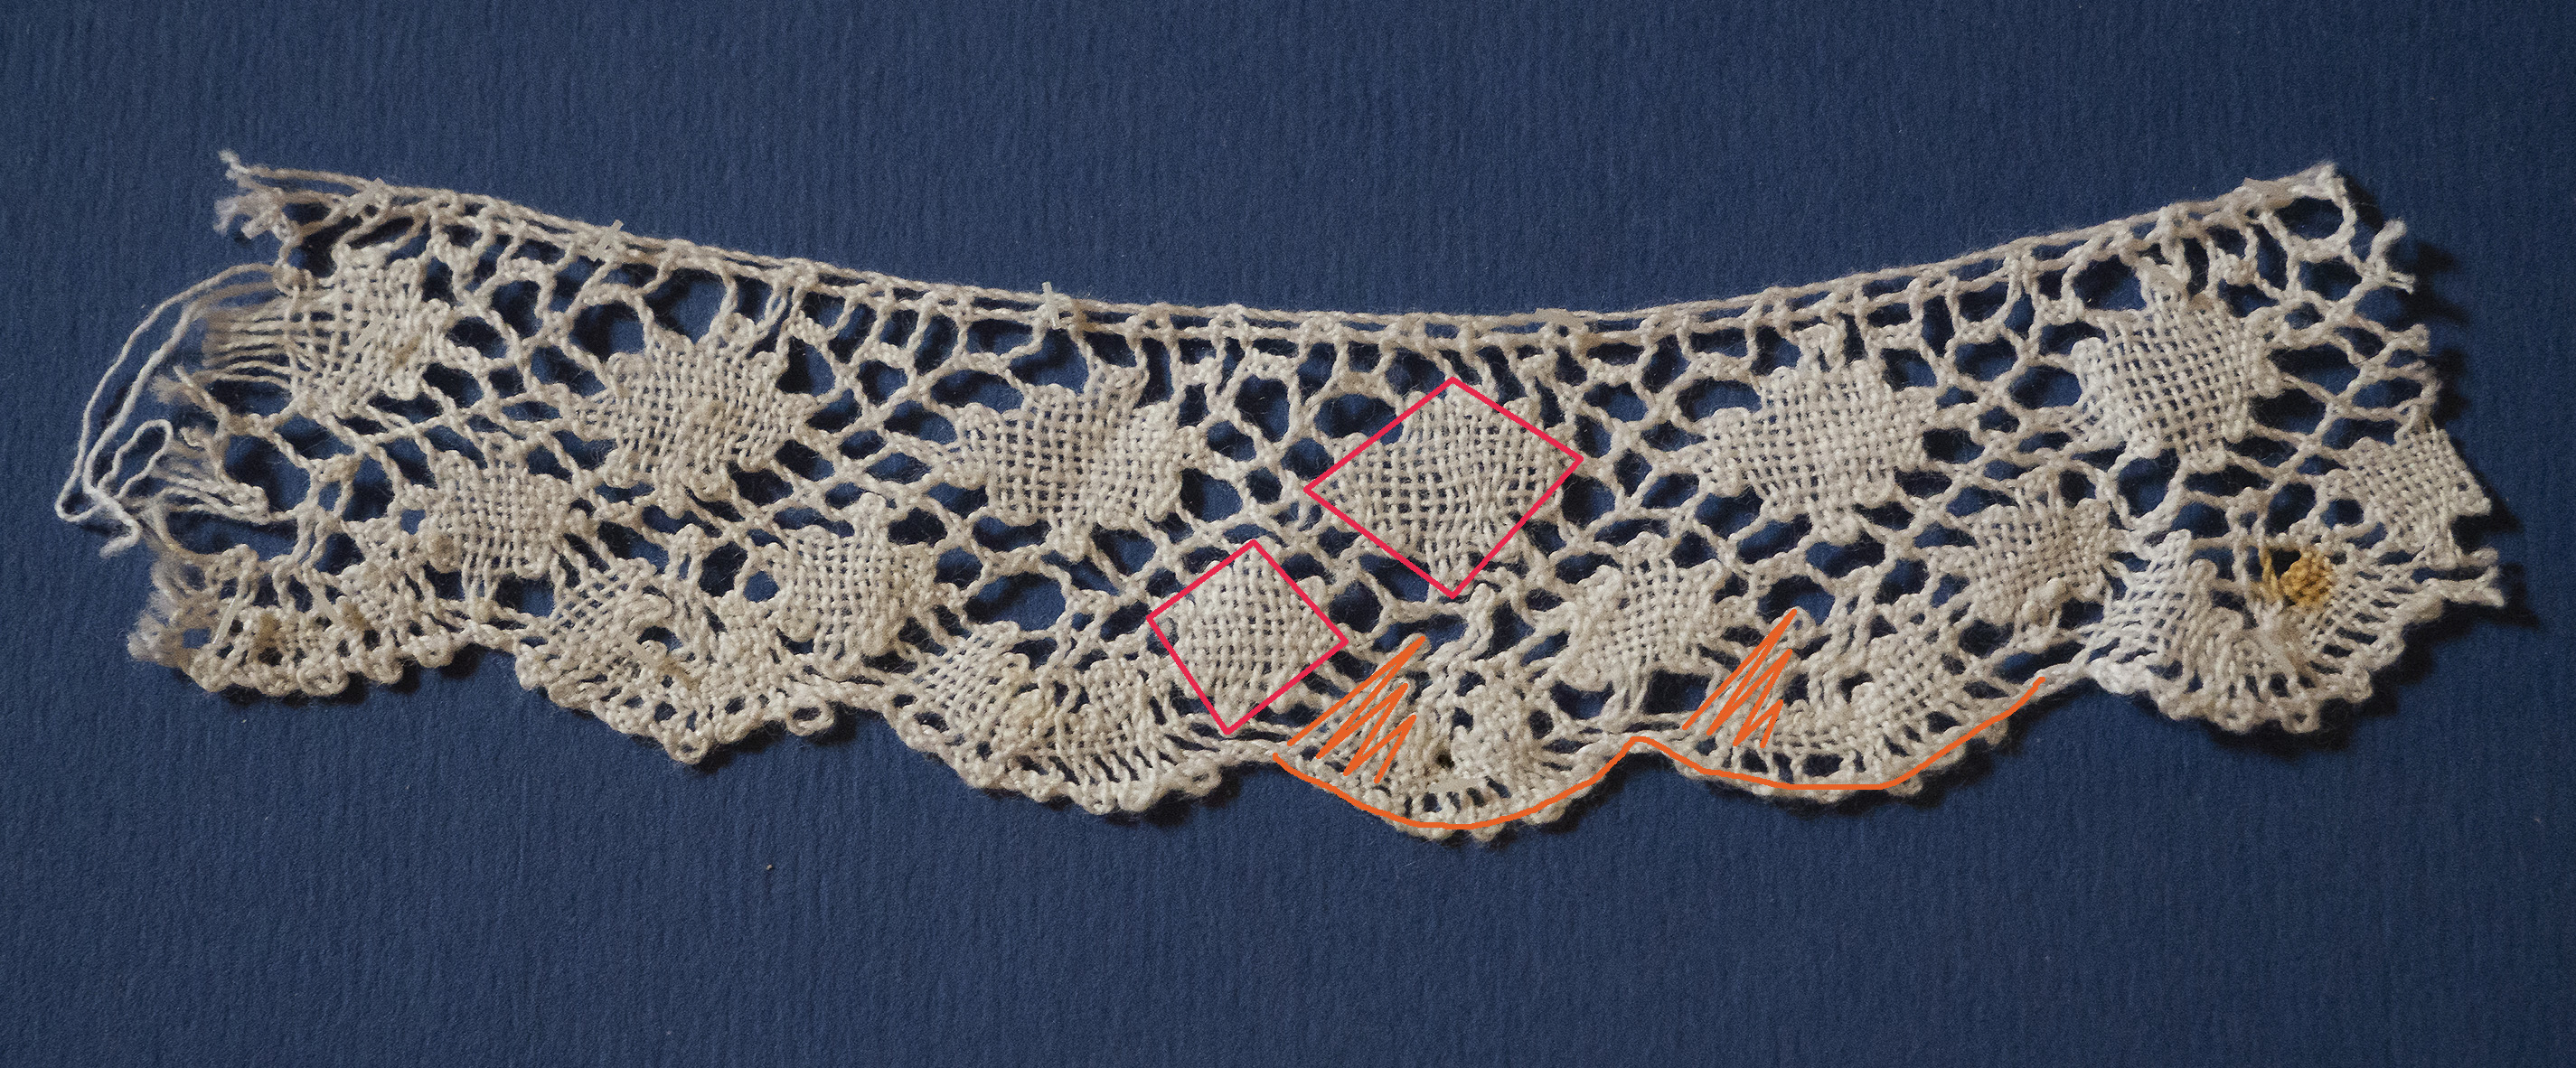 headford lace pattern comparison